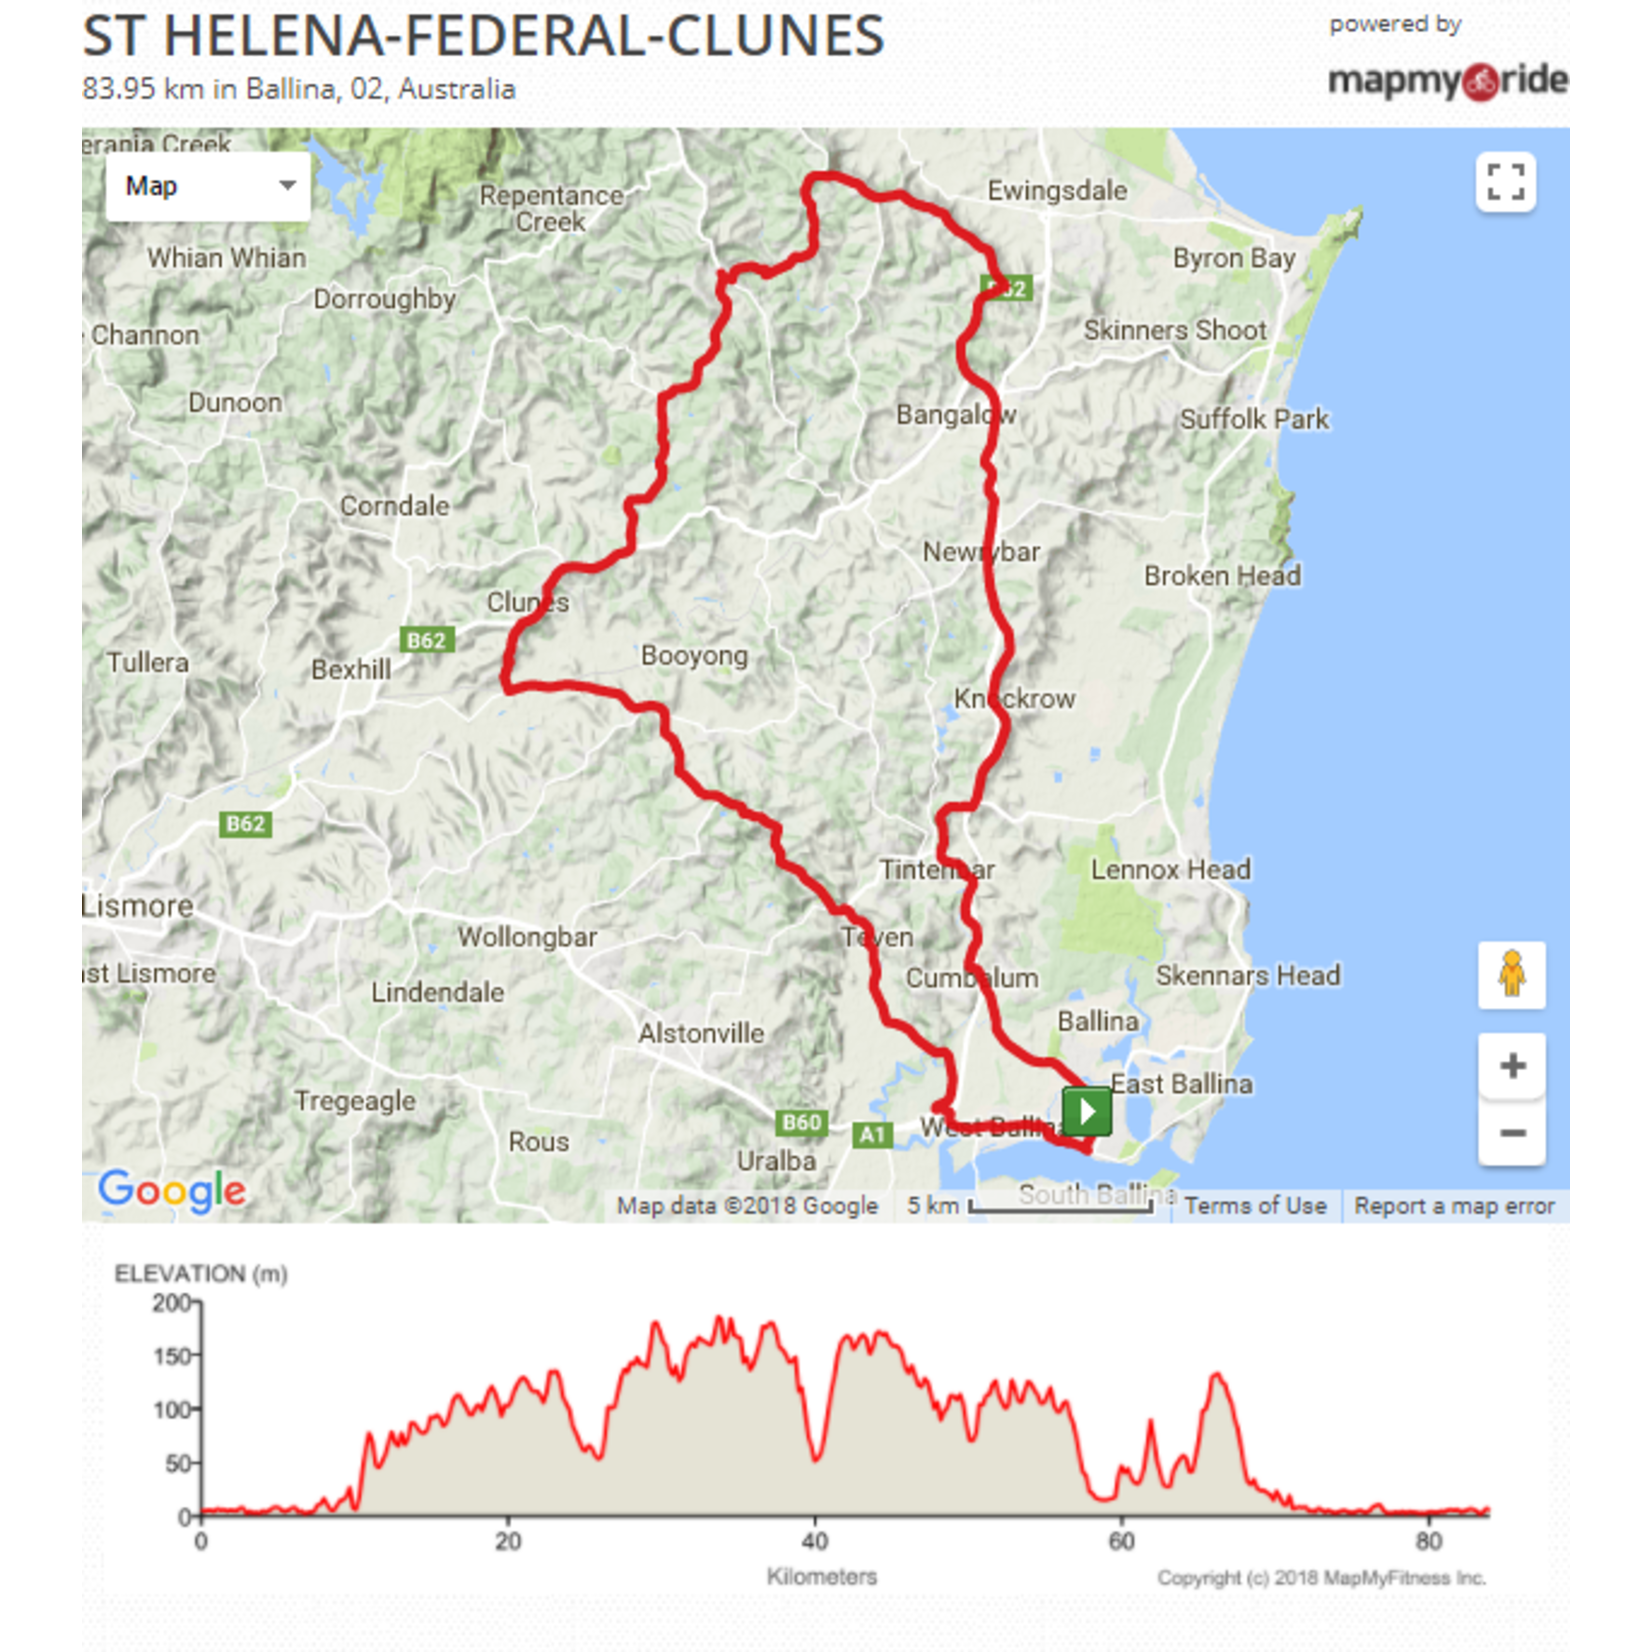 St Helena - Federal - Clunes